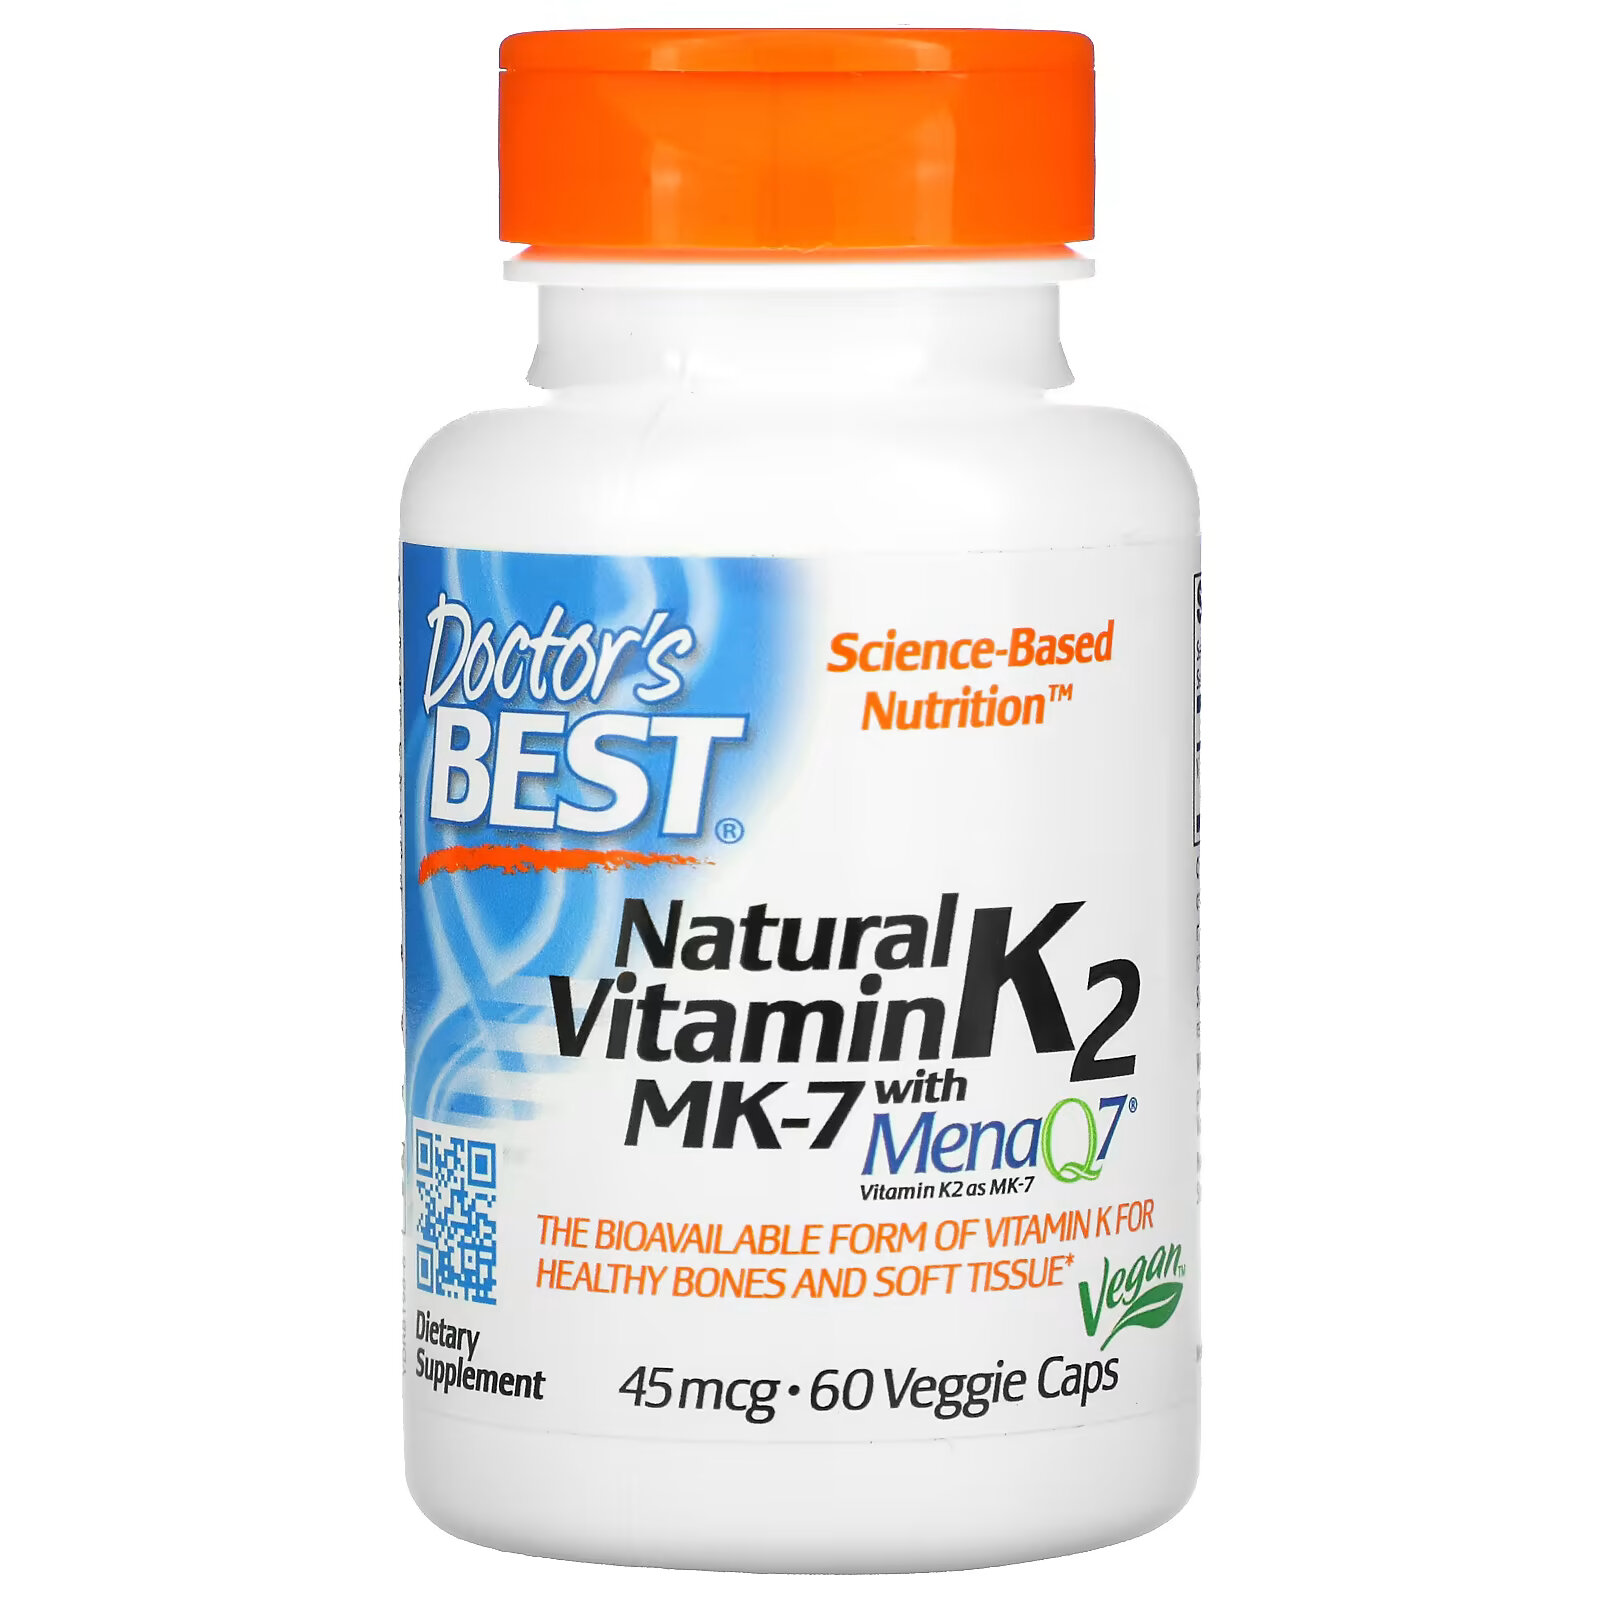 Doctor's Best витамин K2 MK-7 с MenaQ7, 45 мкг, 60 вегетарианских капсул